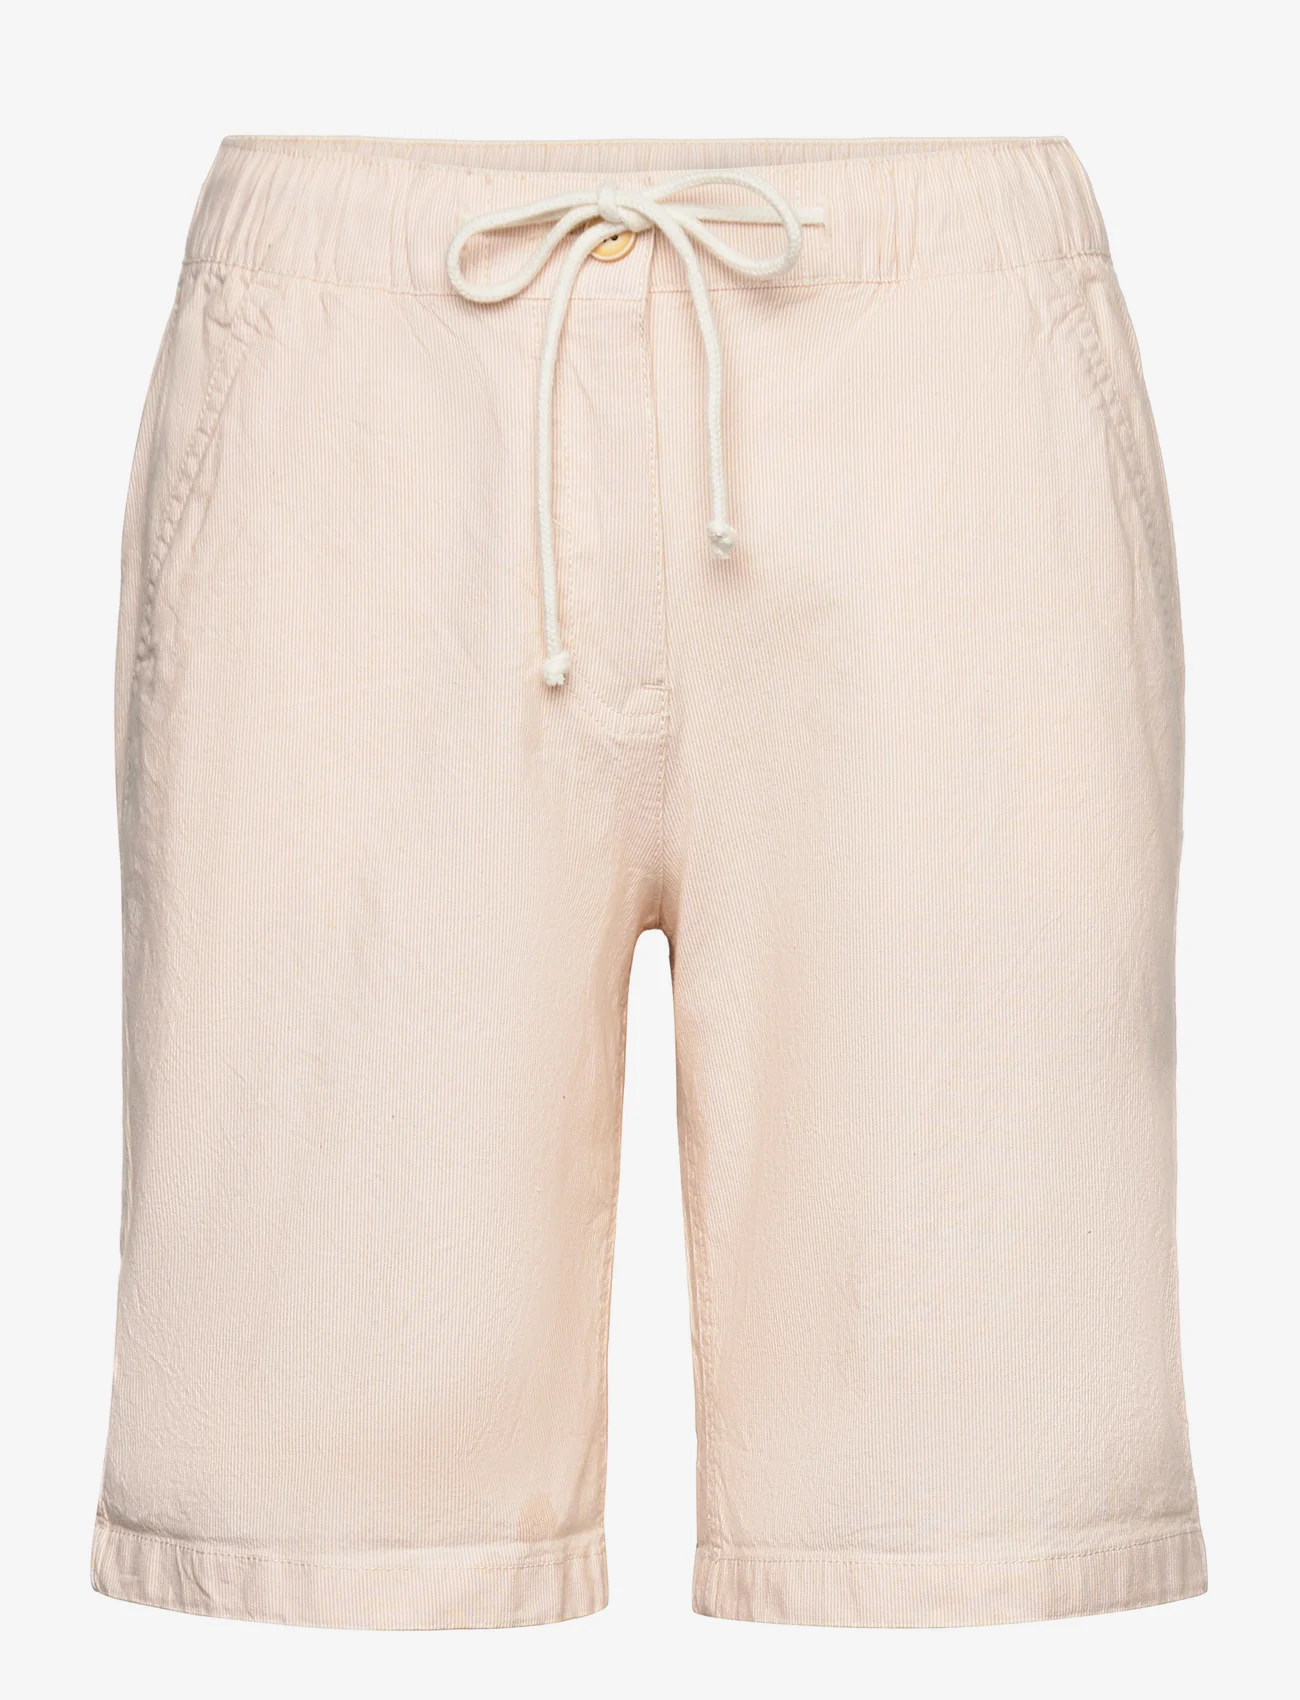 Tom Tailor - bermuda chino shorts - bermudashorts - fawn beige offwhite stripe - 0